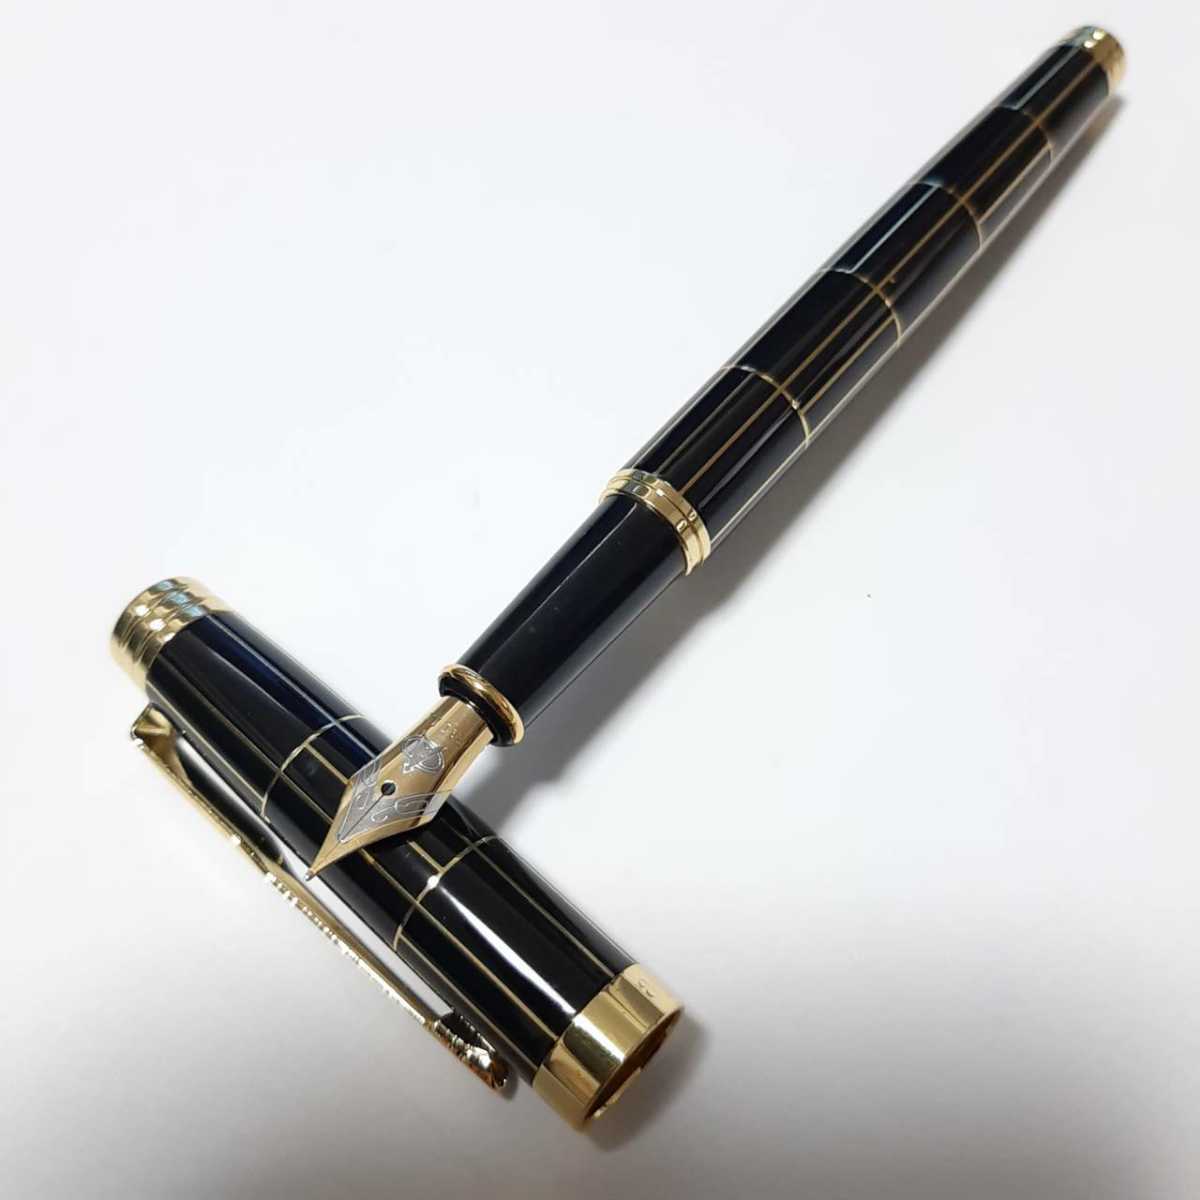  new goods ultra elegant fountain pen writing implements pen black base 12